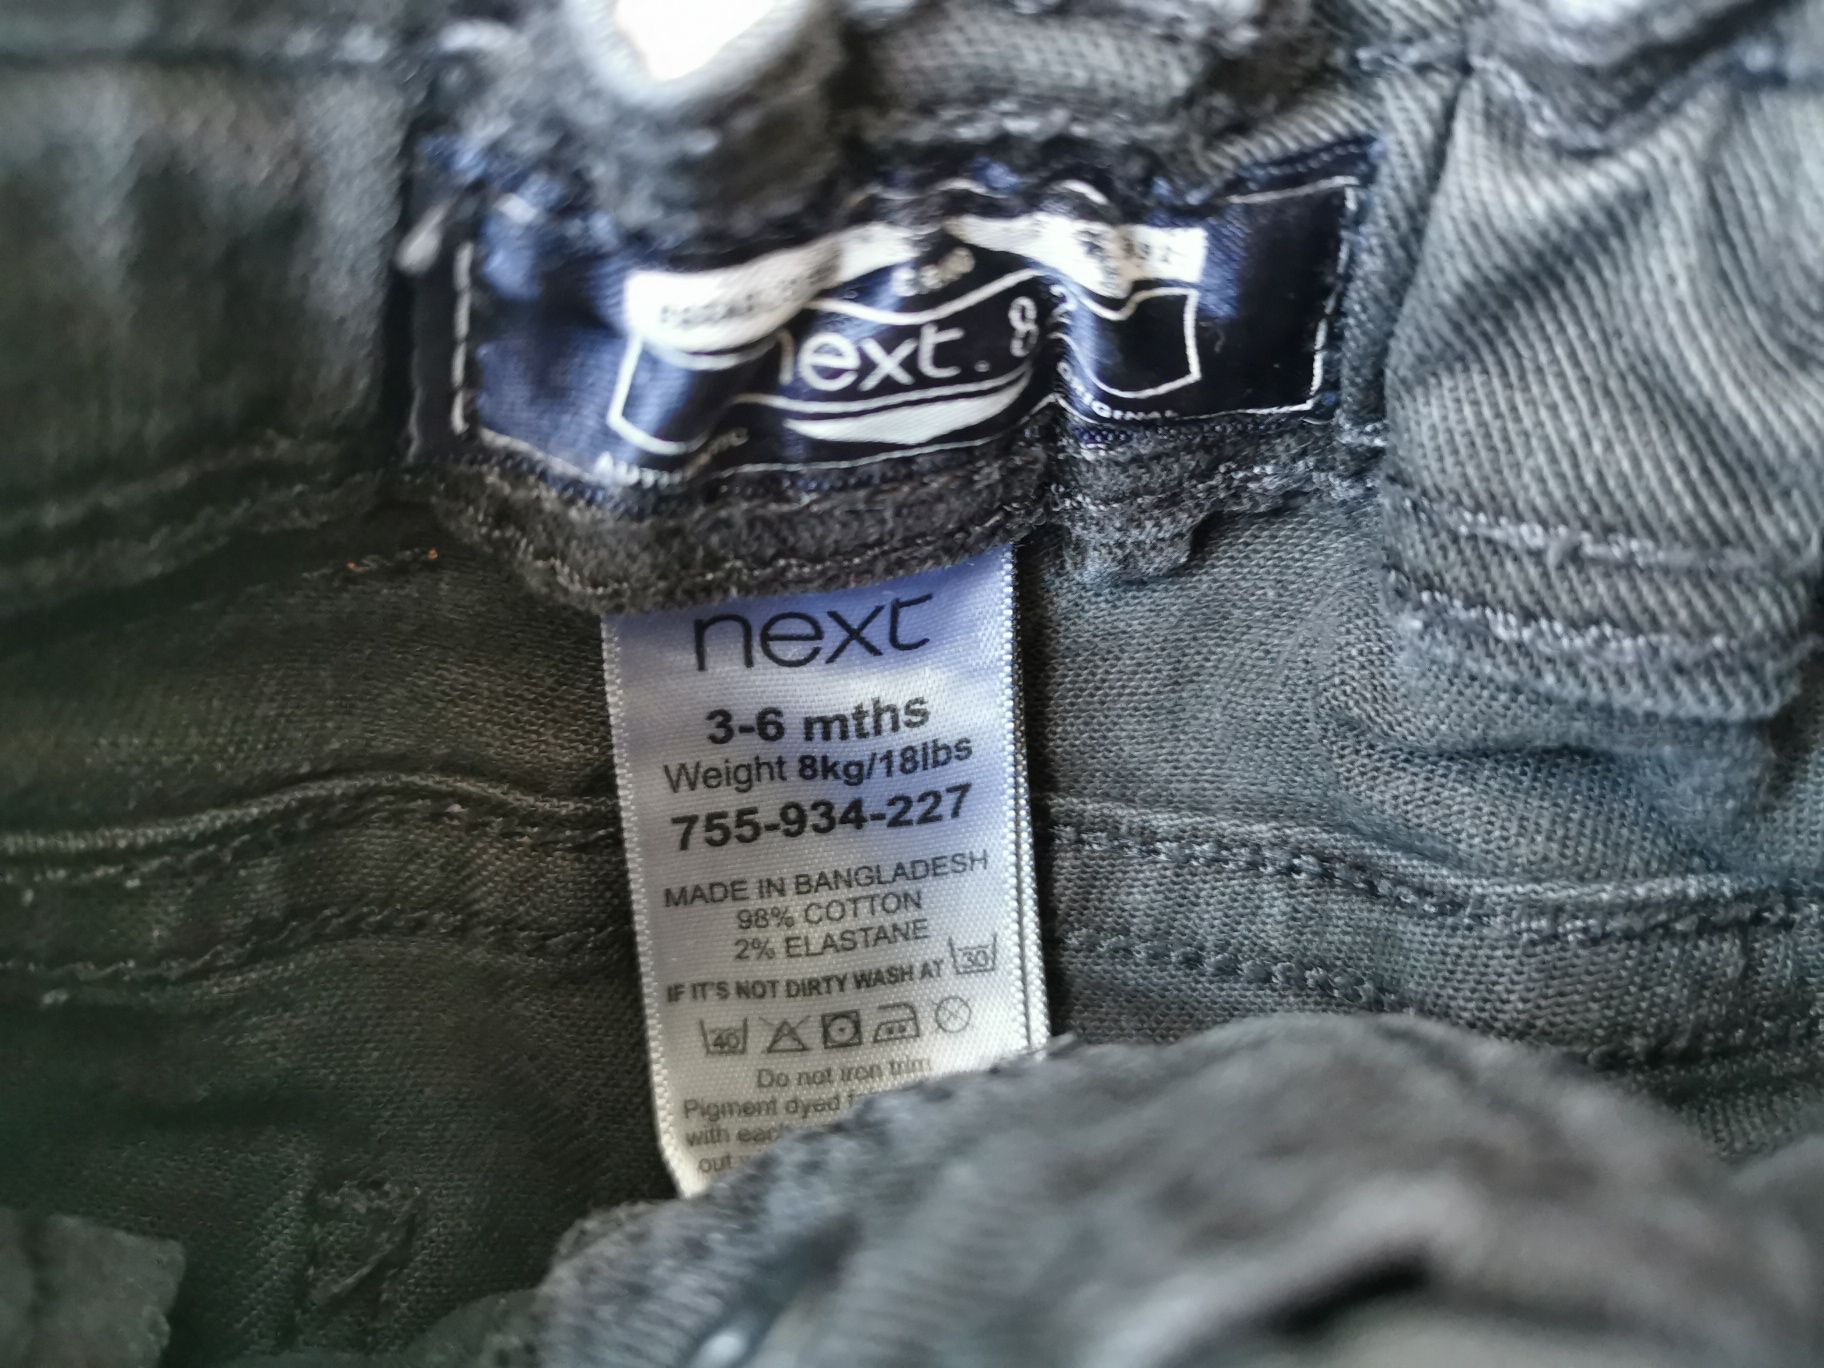 68 4 x spodnie dżinsy dresy leginsy